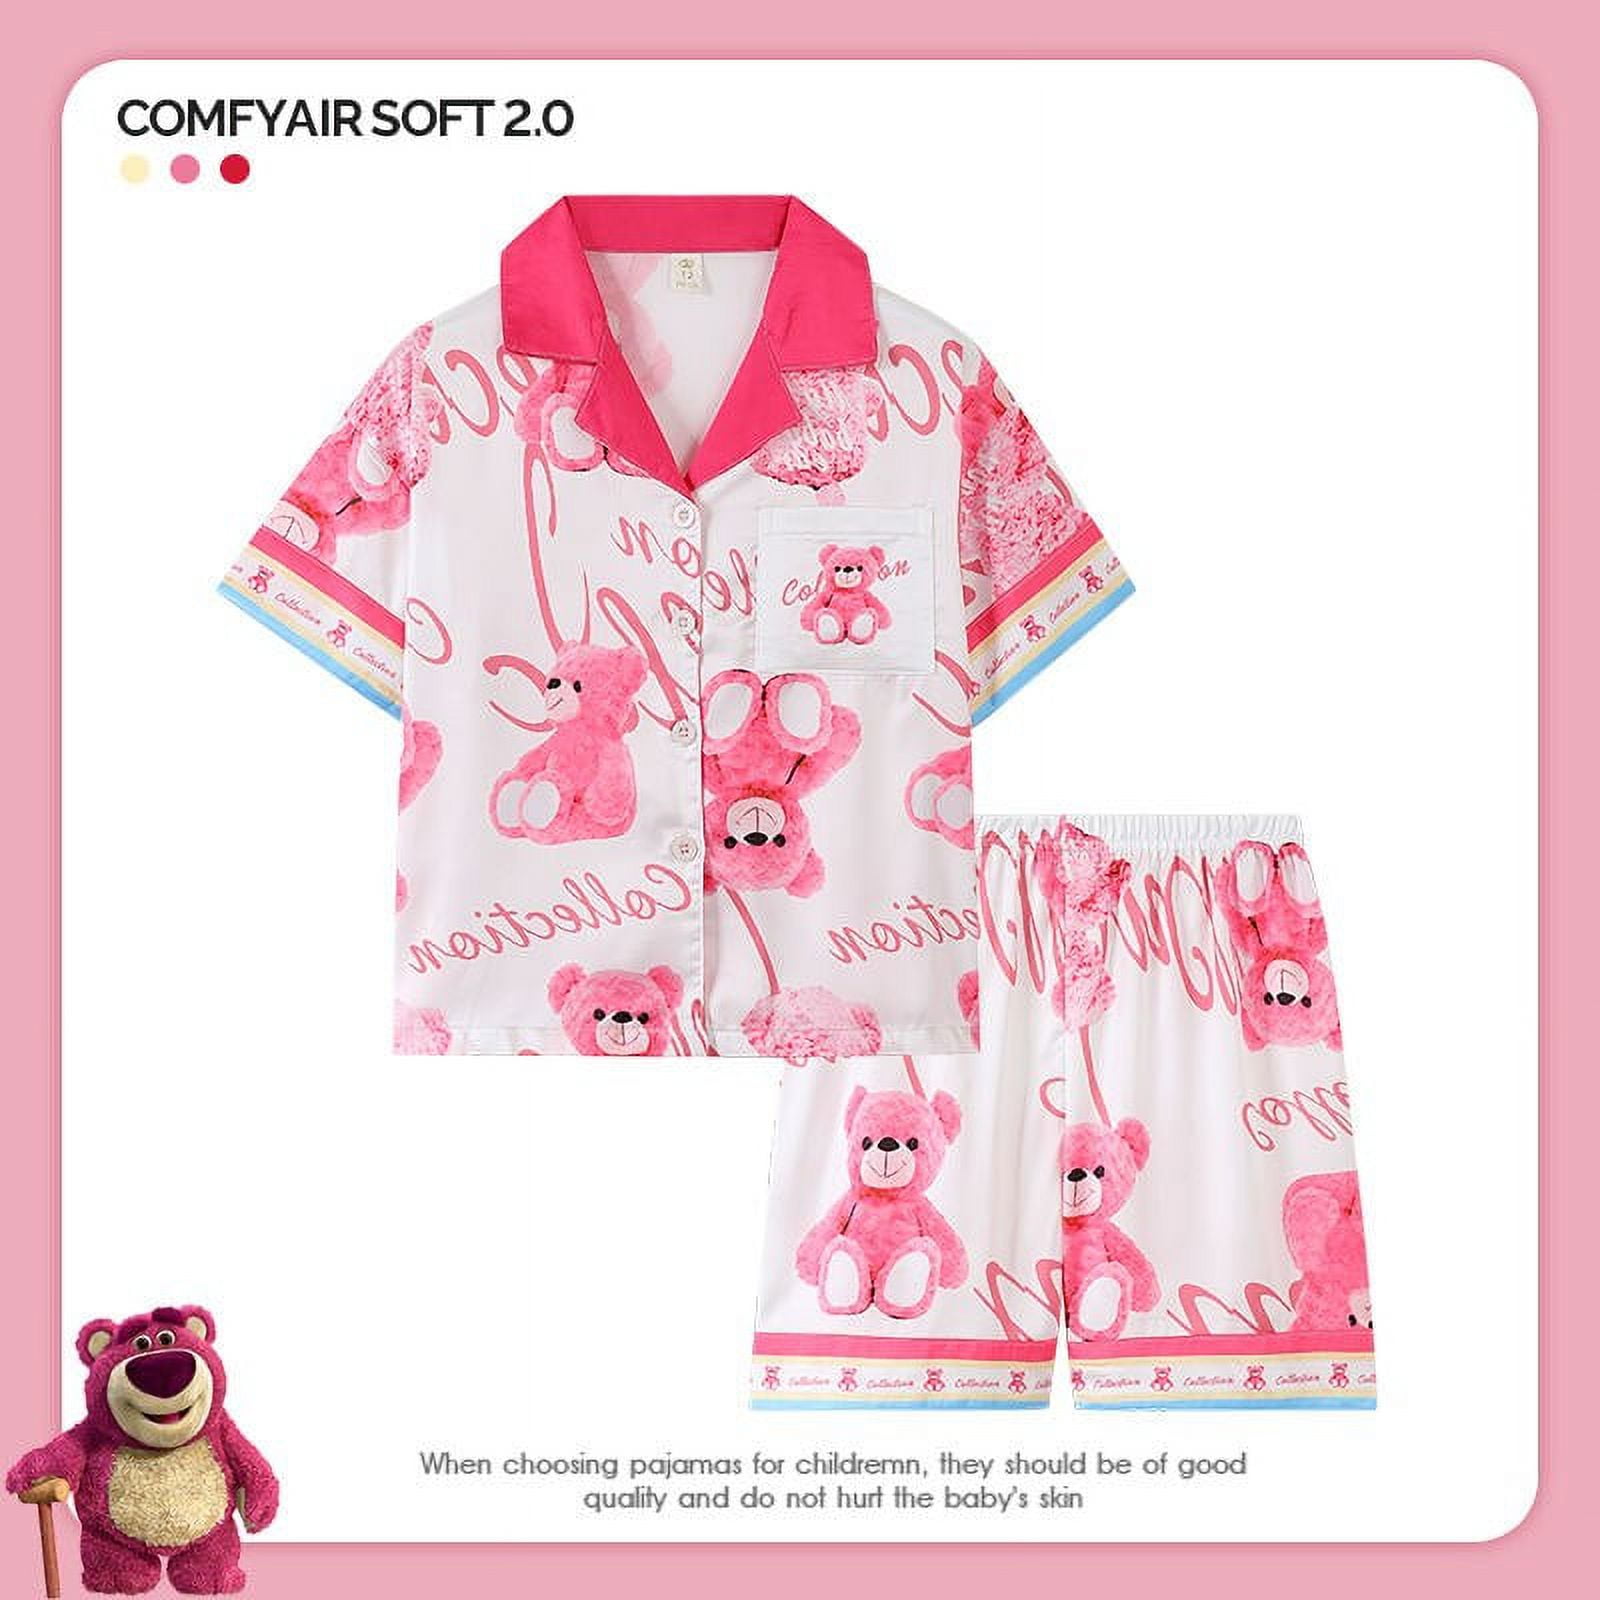 Kawaii Sanrio My Melody Kids Pajamas Sets Cartoon Cinnamoroll